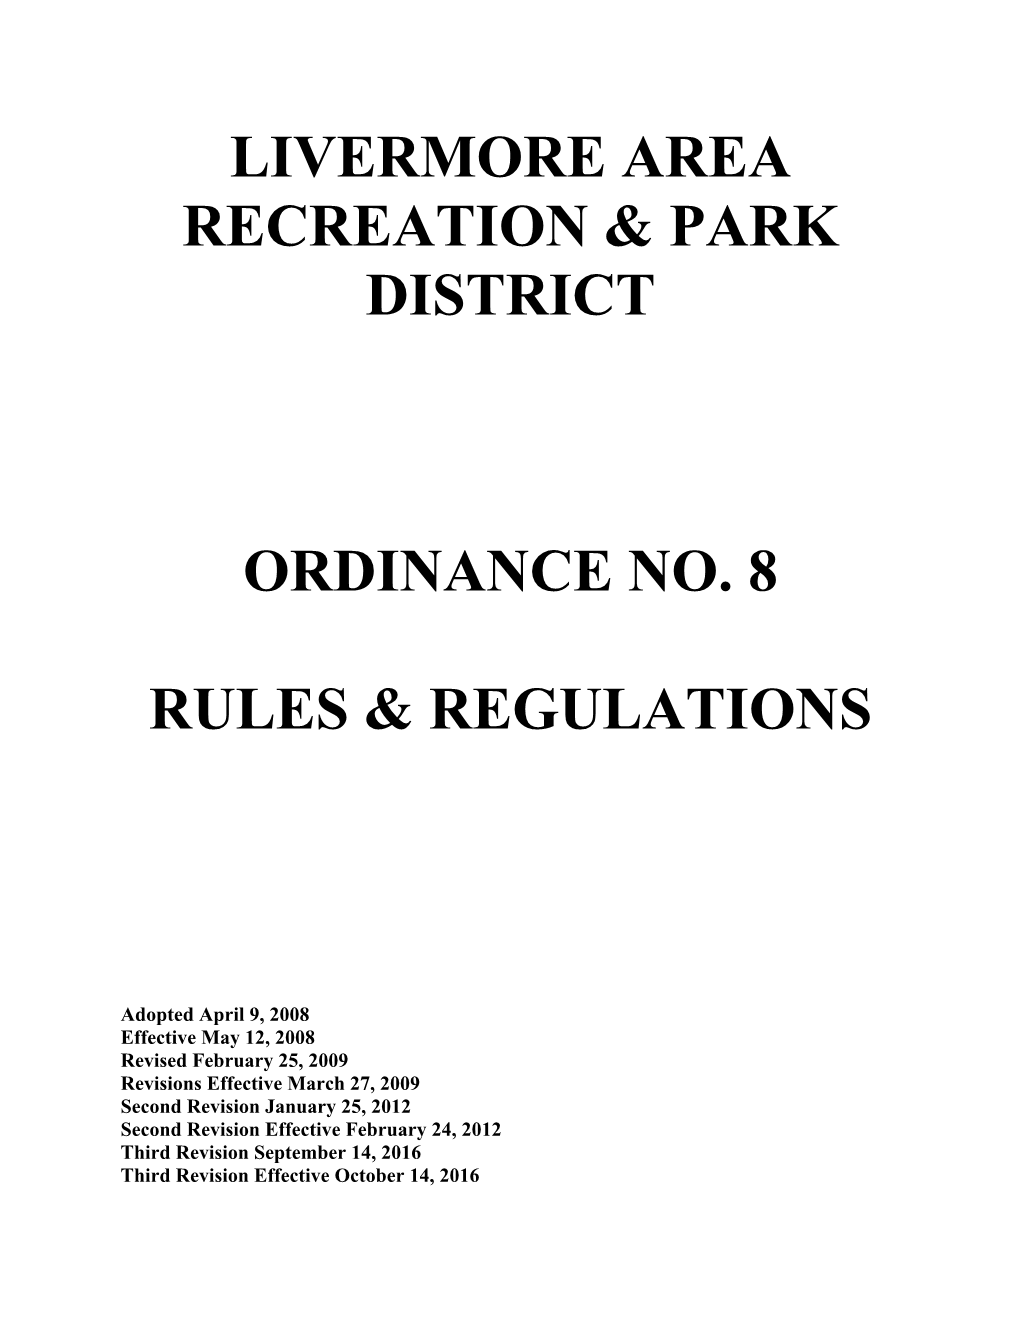 Livermore Area Recreation & Park District Ordinance No. 8 Rules & Regulations